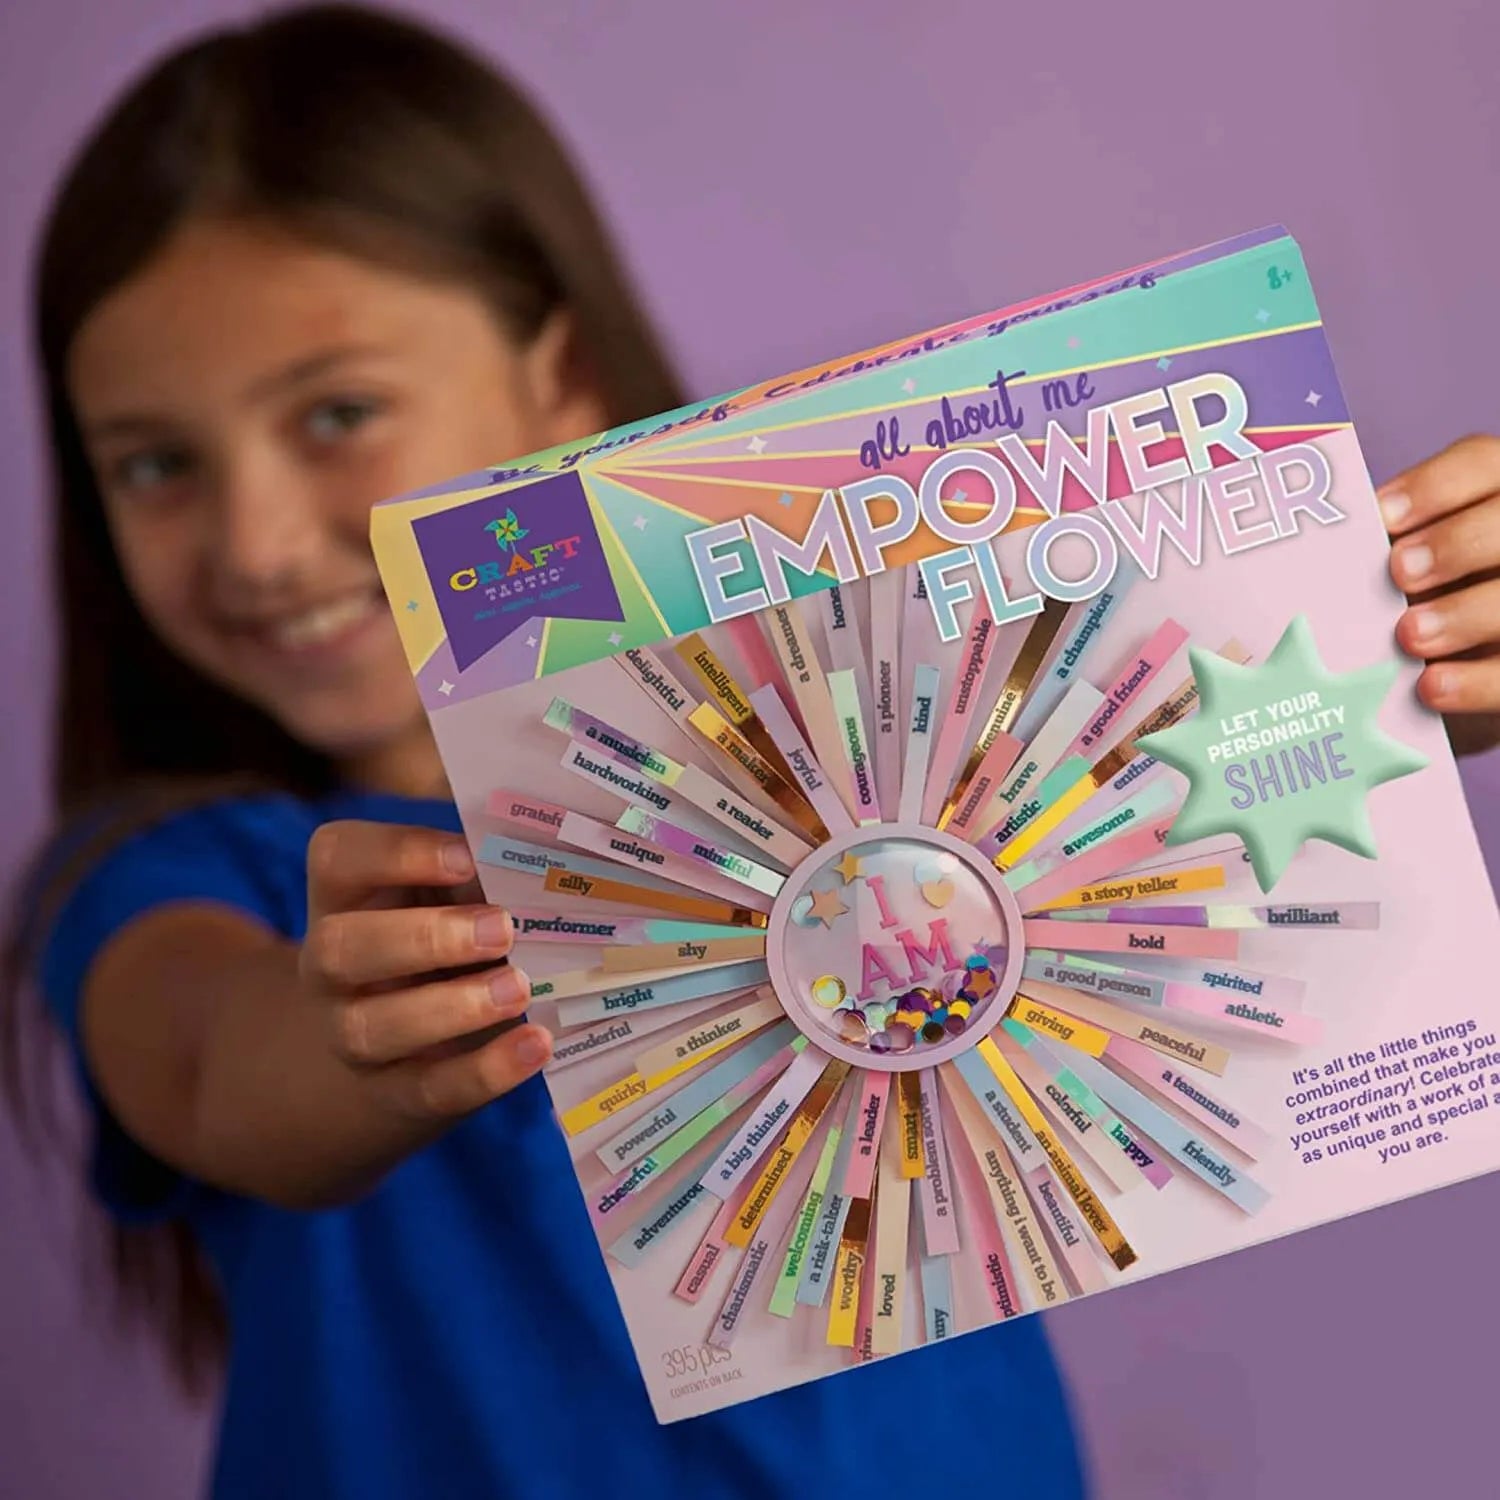 Enhance creativity - Empower flower - Playmonster